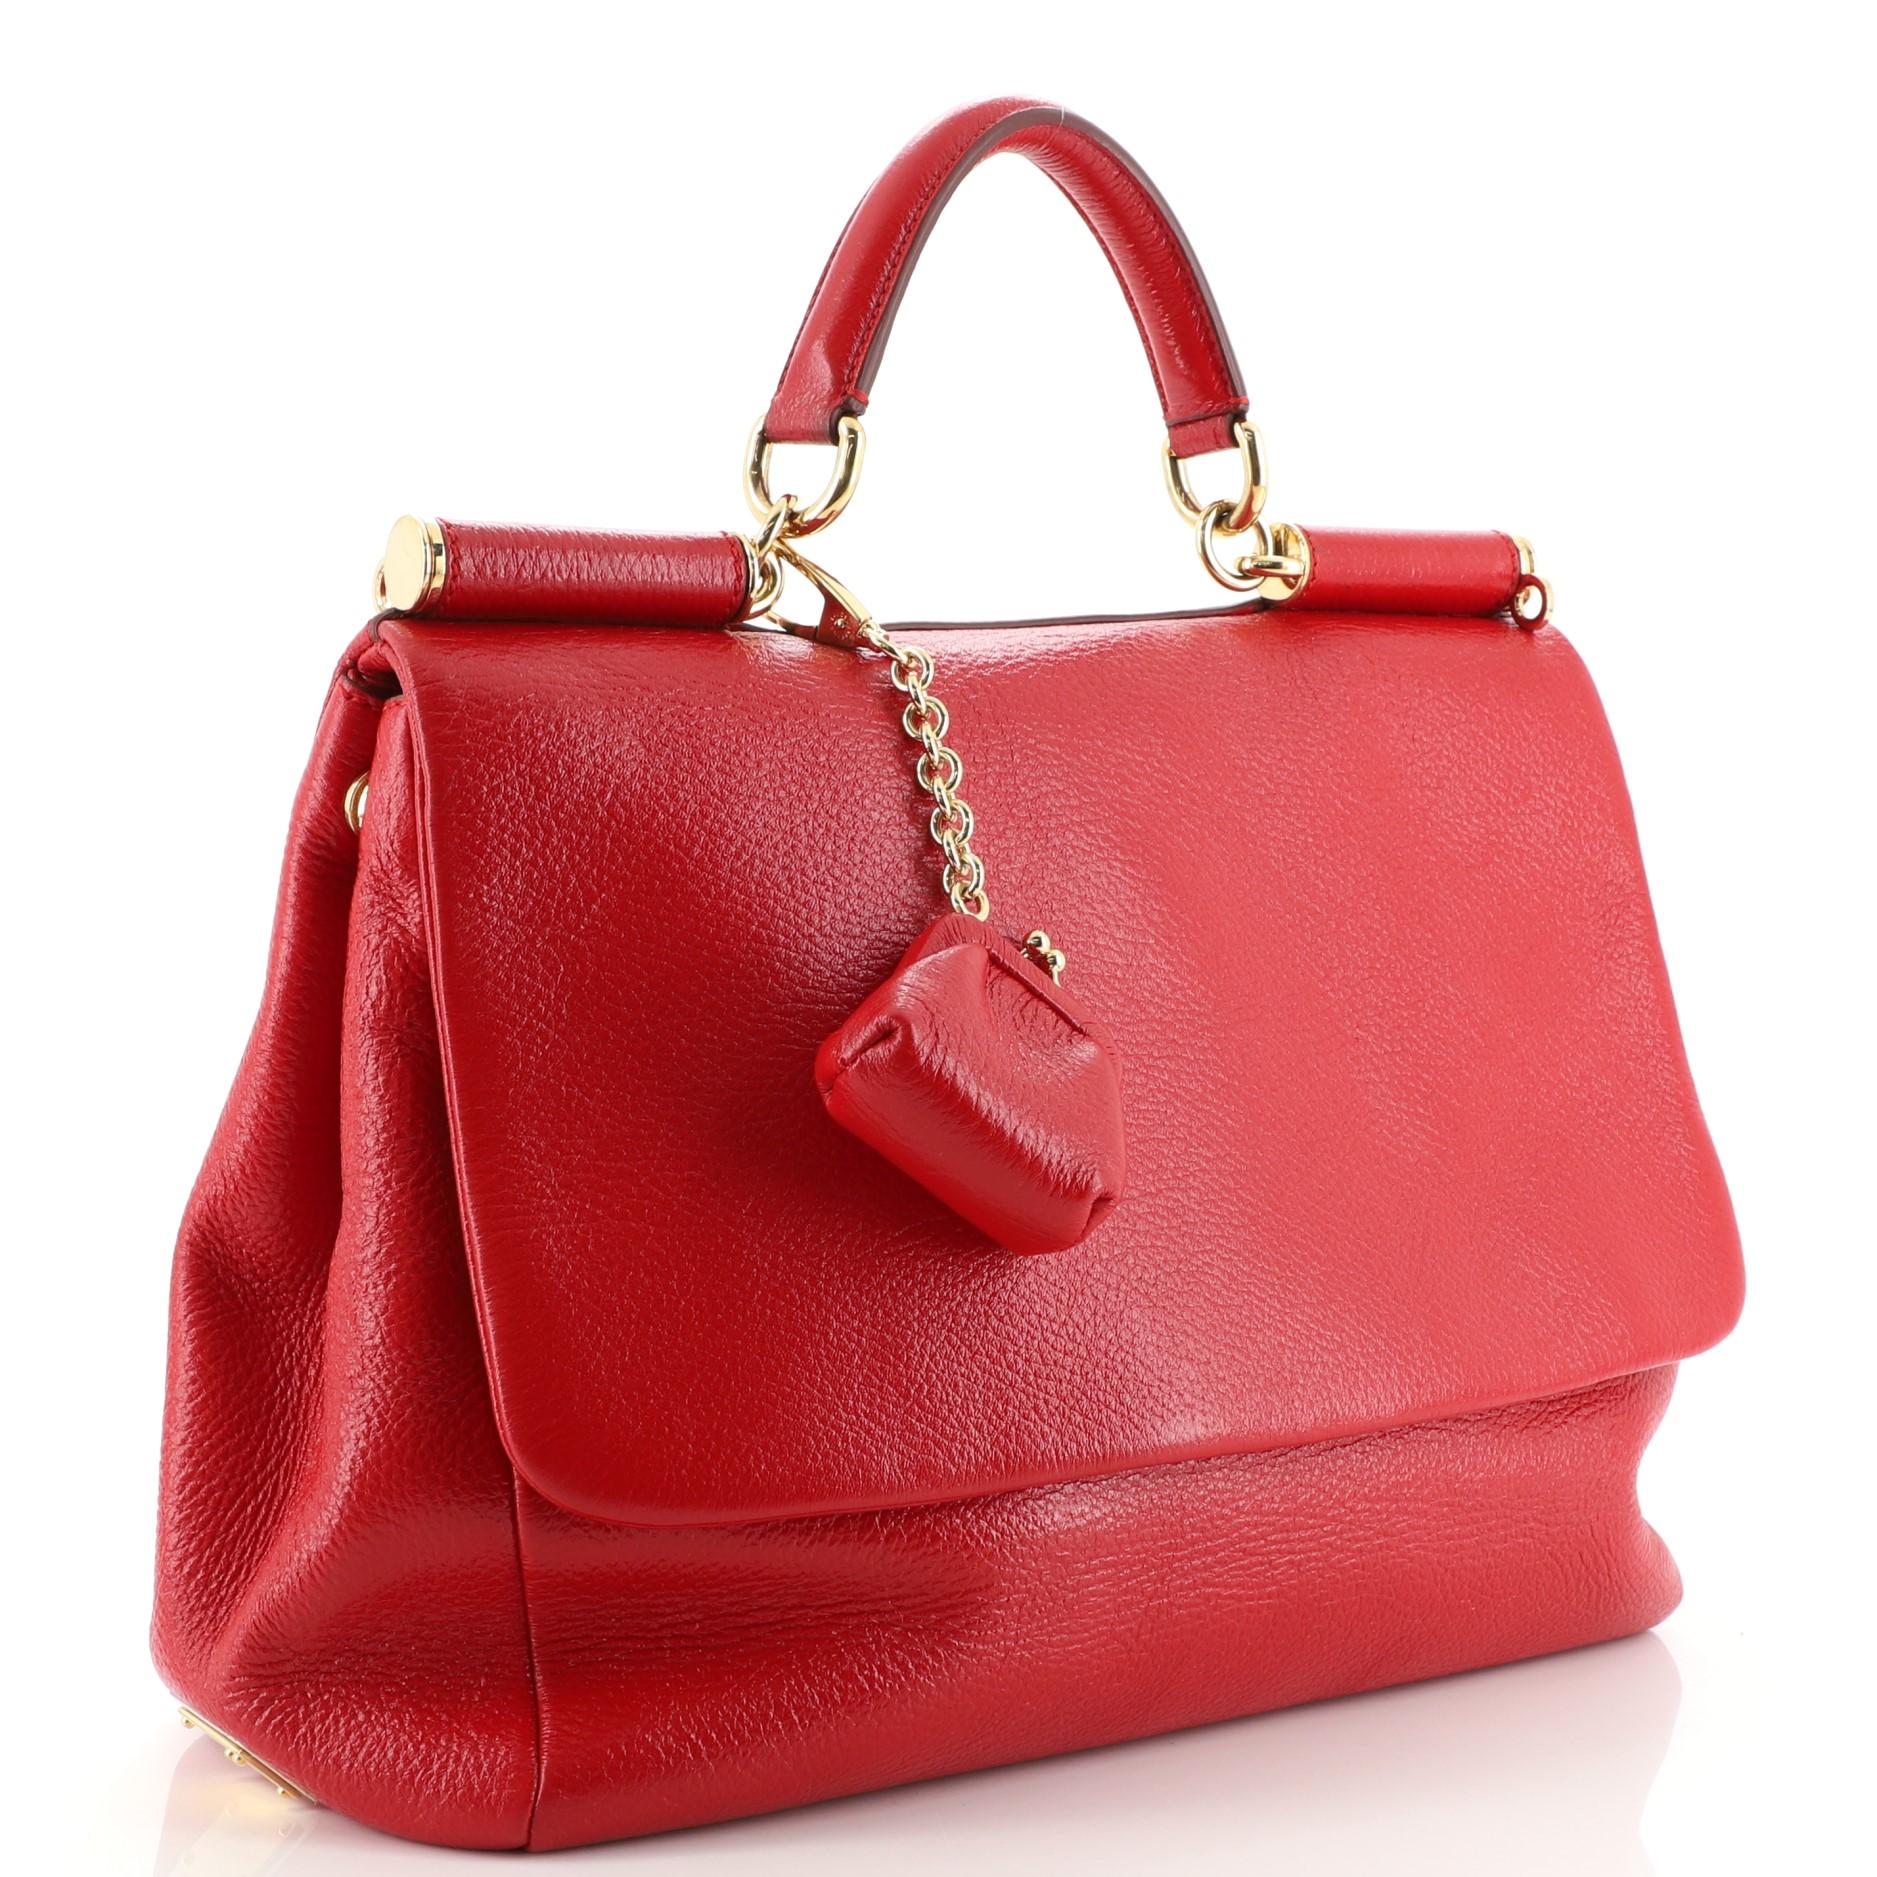 Red Dolce & Gabbana Soft Miss Sicily Bag Leather Medium